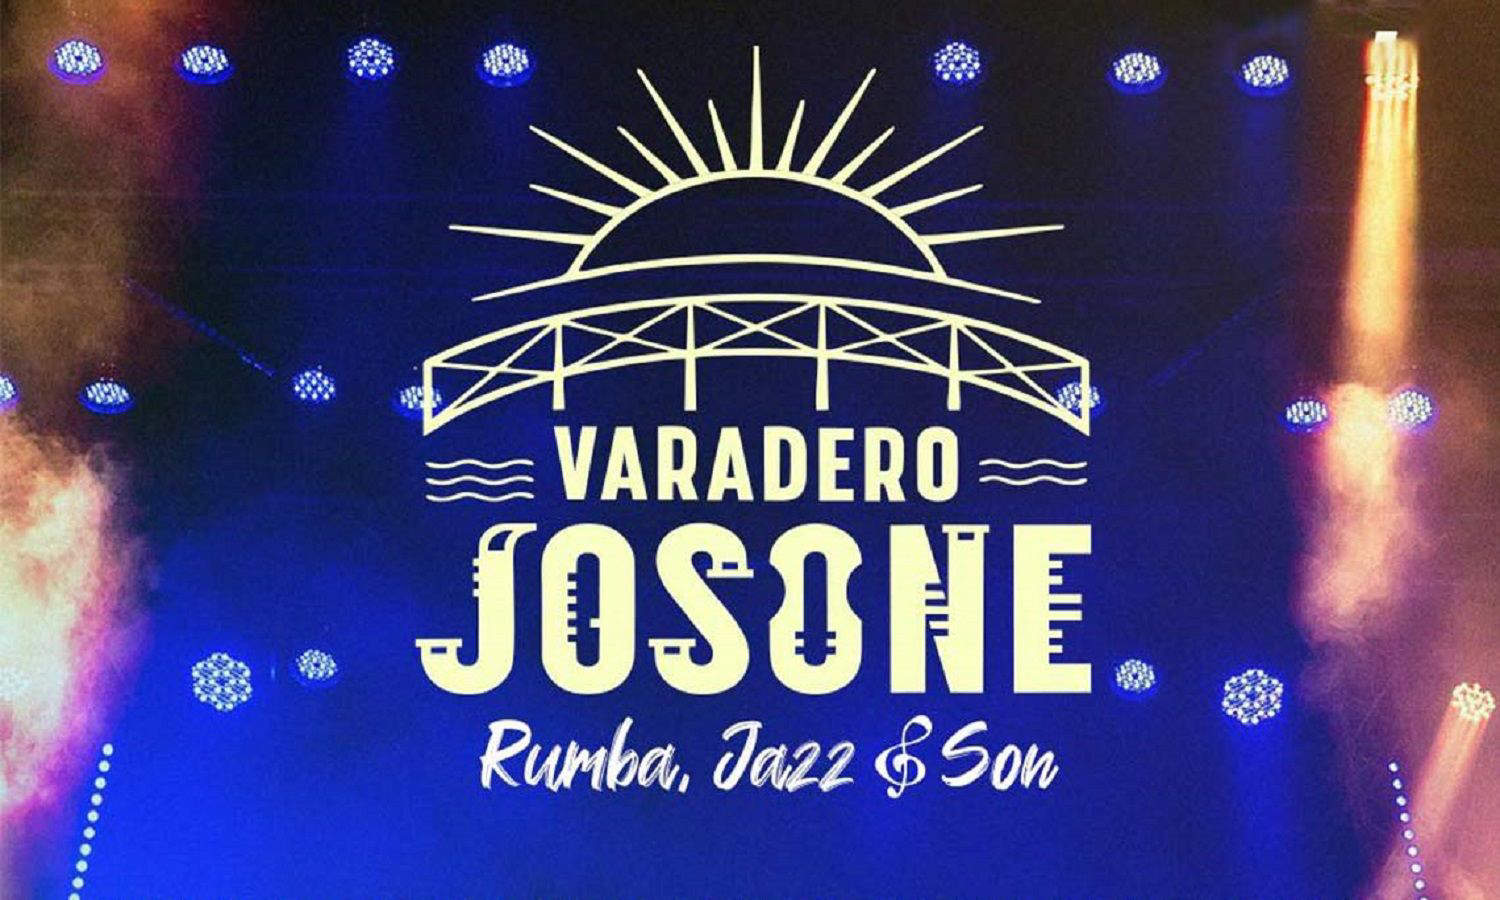 Varadero Josone Festival arrives today at the Cuban resort